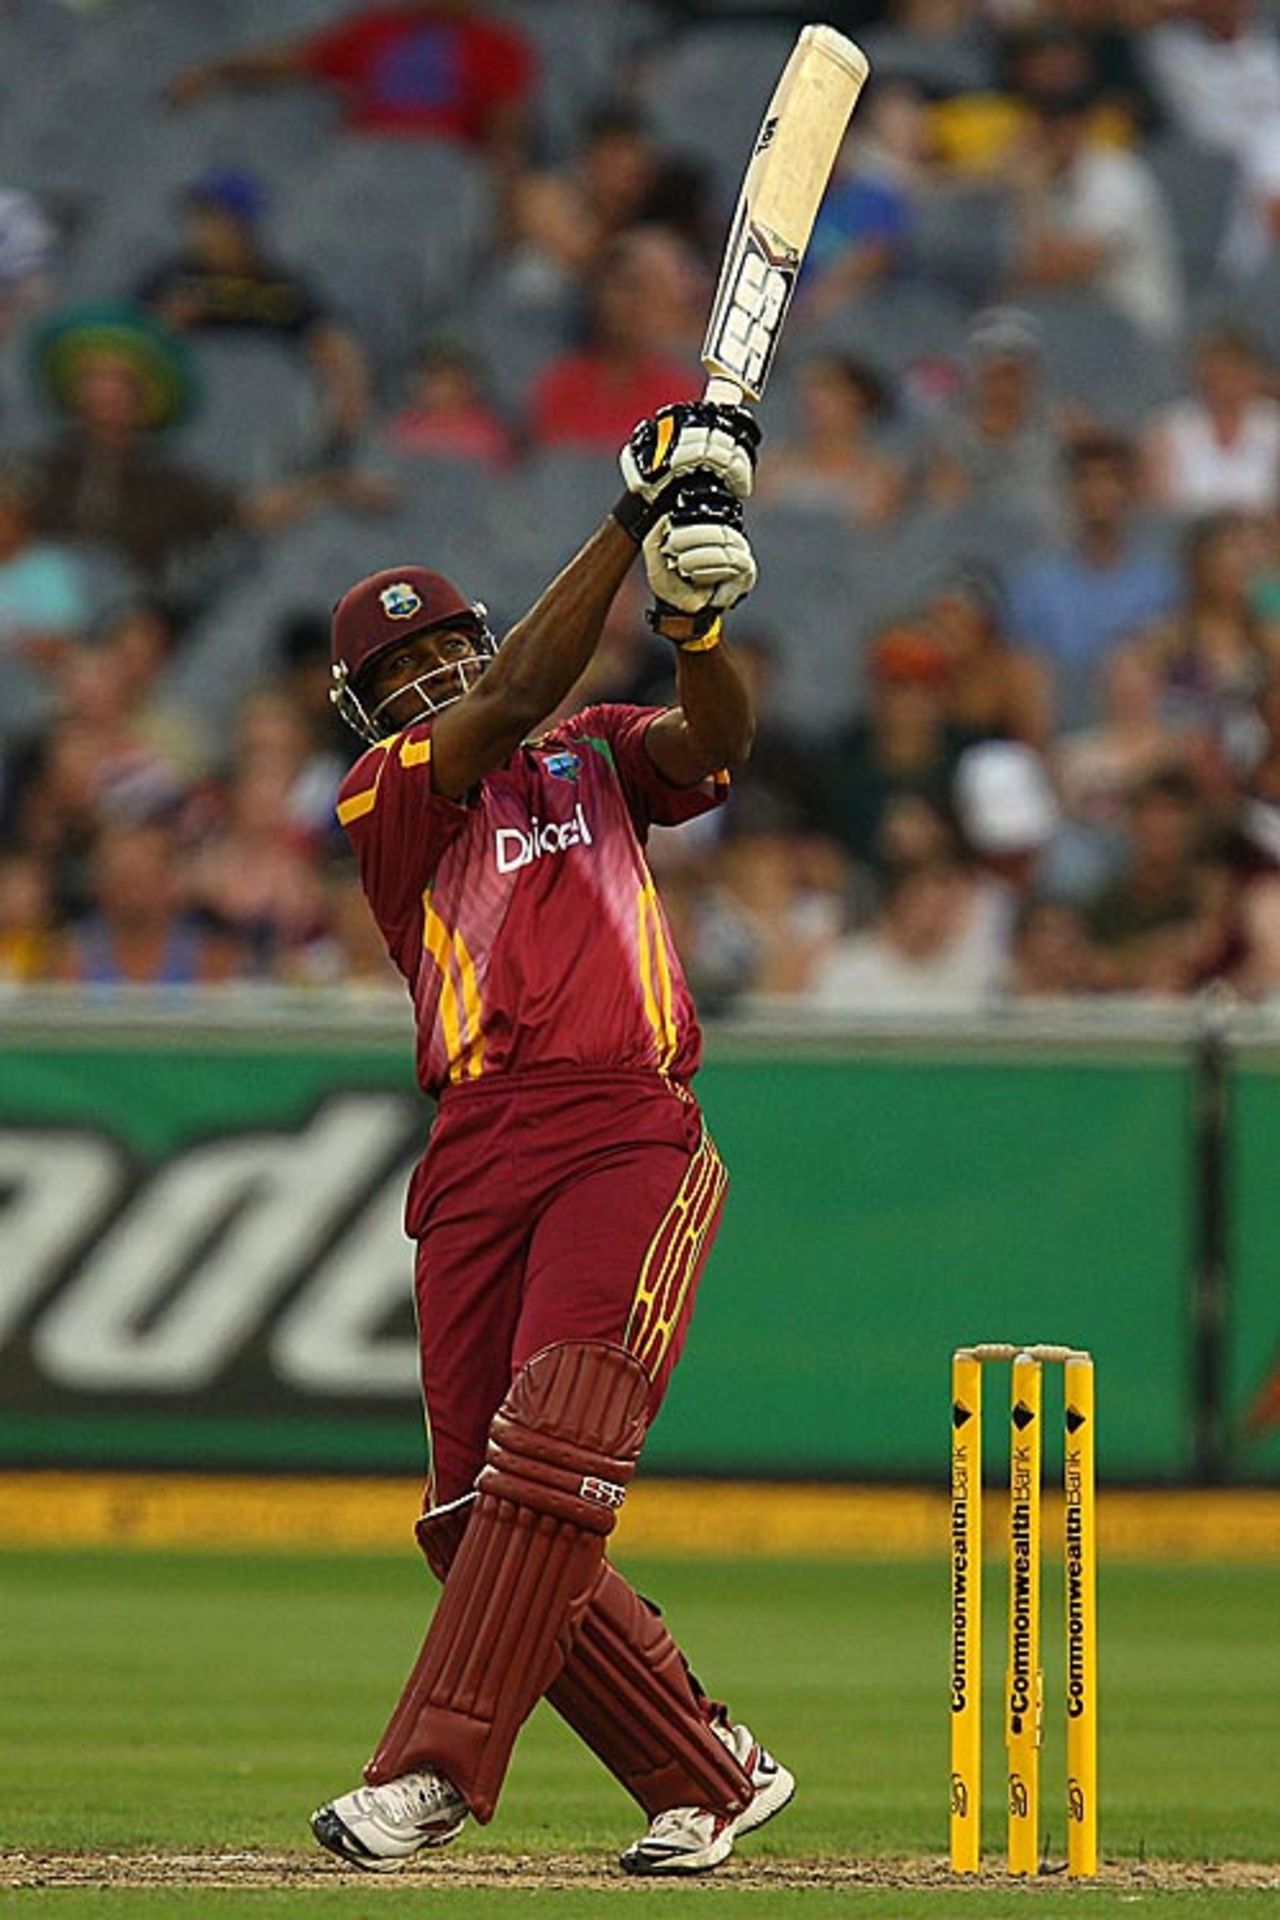 Kieron Pollard launches into one, Australia v West Indies, 5th ODI, Melbourne, 19 February, 2010